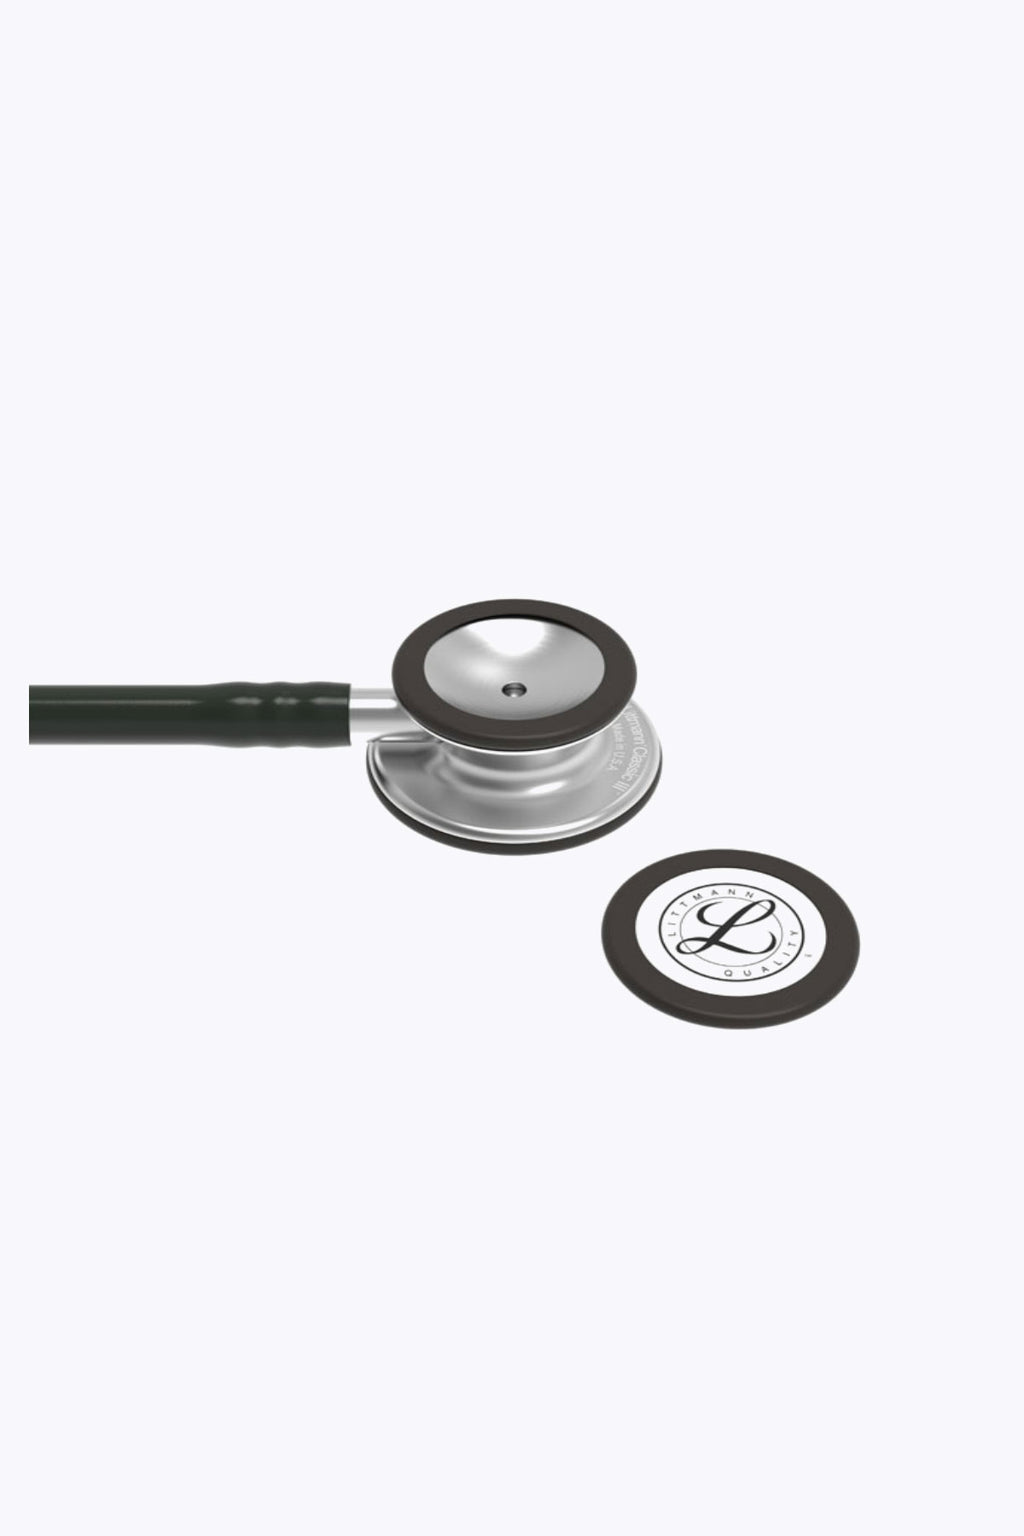 Product - Littmann Classic III Stethoscope